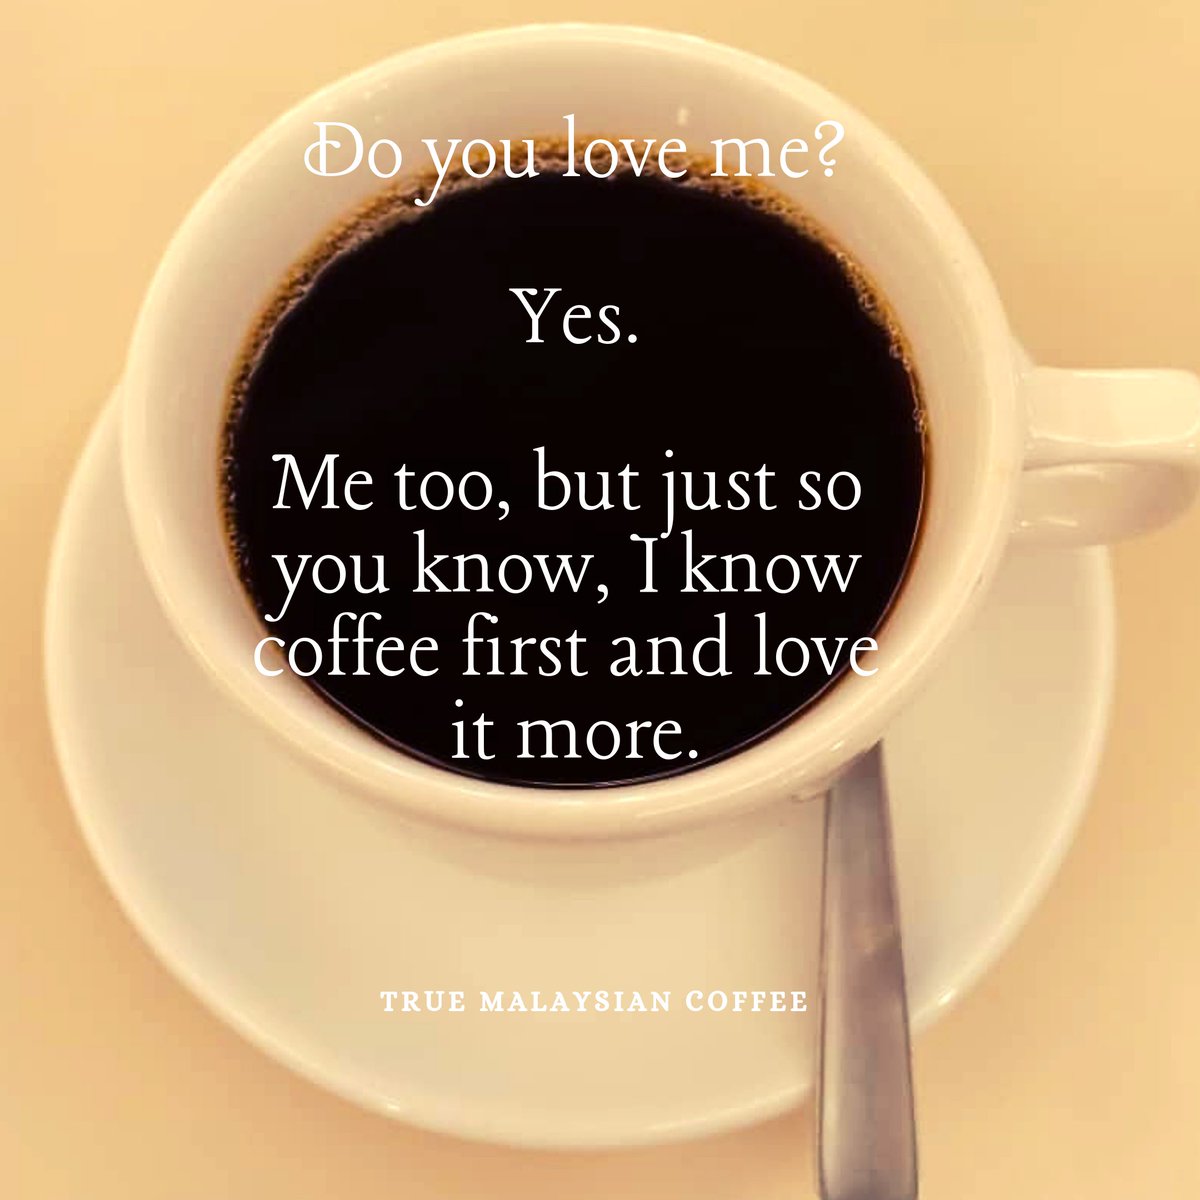 Coffee first
#TrueMalaysianCoffee #coffee #coffeeshop #coffeebeans #coffeetime #coffeecup #coffeegeek #coffeeholic #coffeelover #coffeelovers #coffeelike #coffeeworldwide #coffeegram #coffeeart #coffeequotes #coffeequote #espresso #espressomachine #coffeeprops #lovelovelove